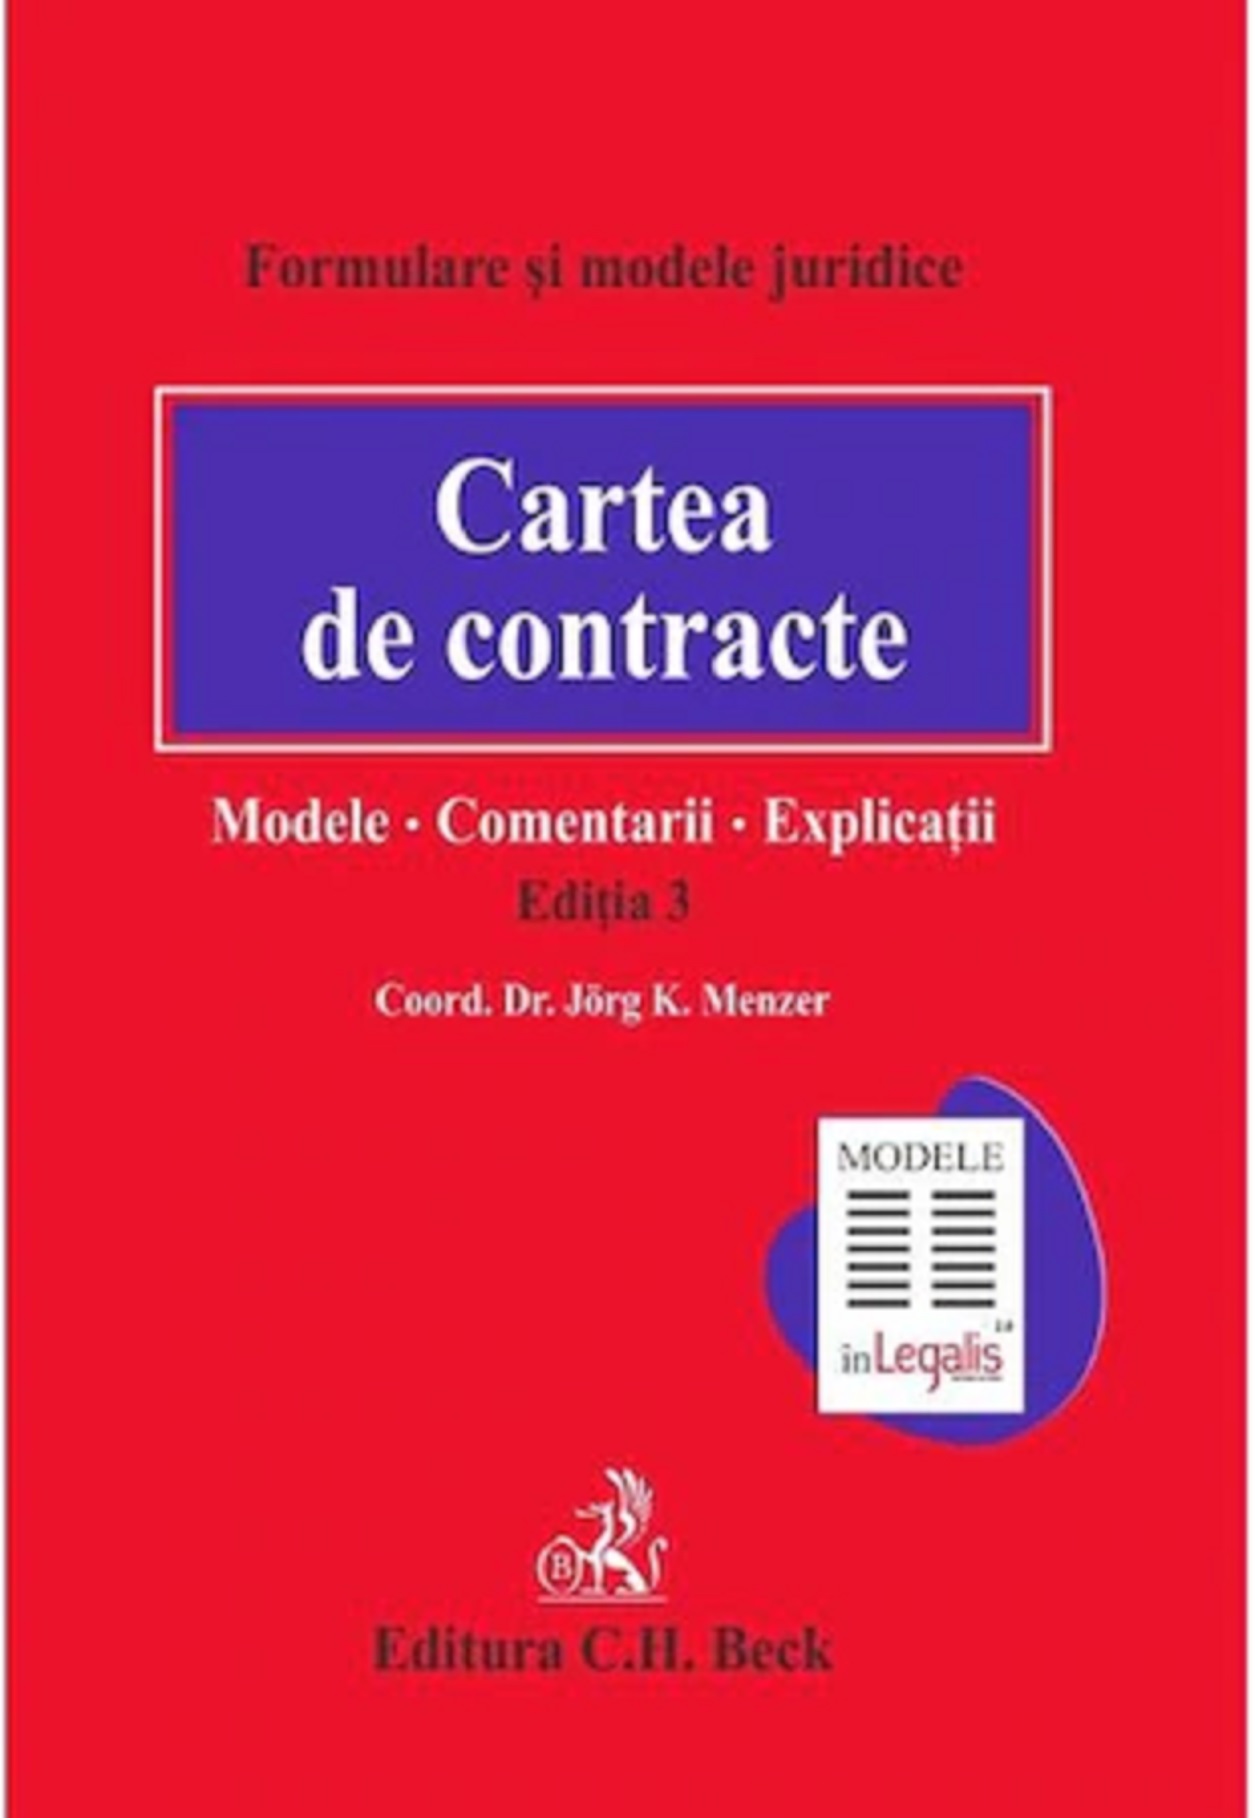 Cartea de contracte | Jorg K. Menzer, Rusandra Sandu C.H. Beck poza bestsellers.ro